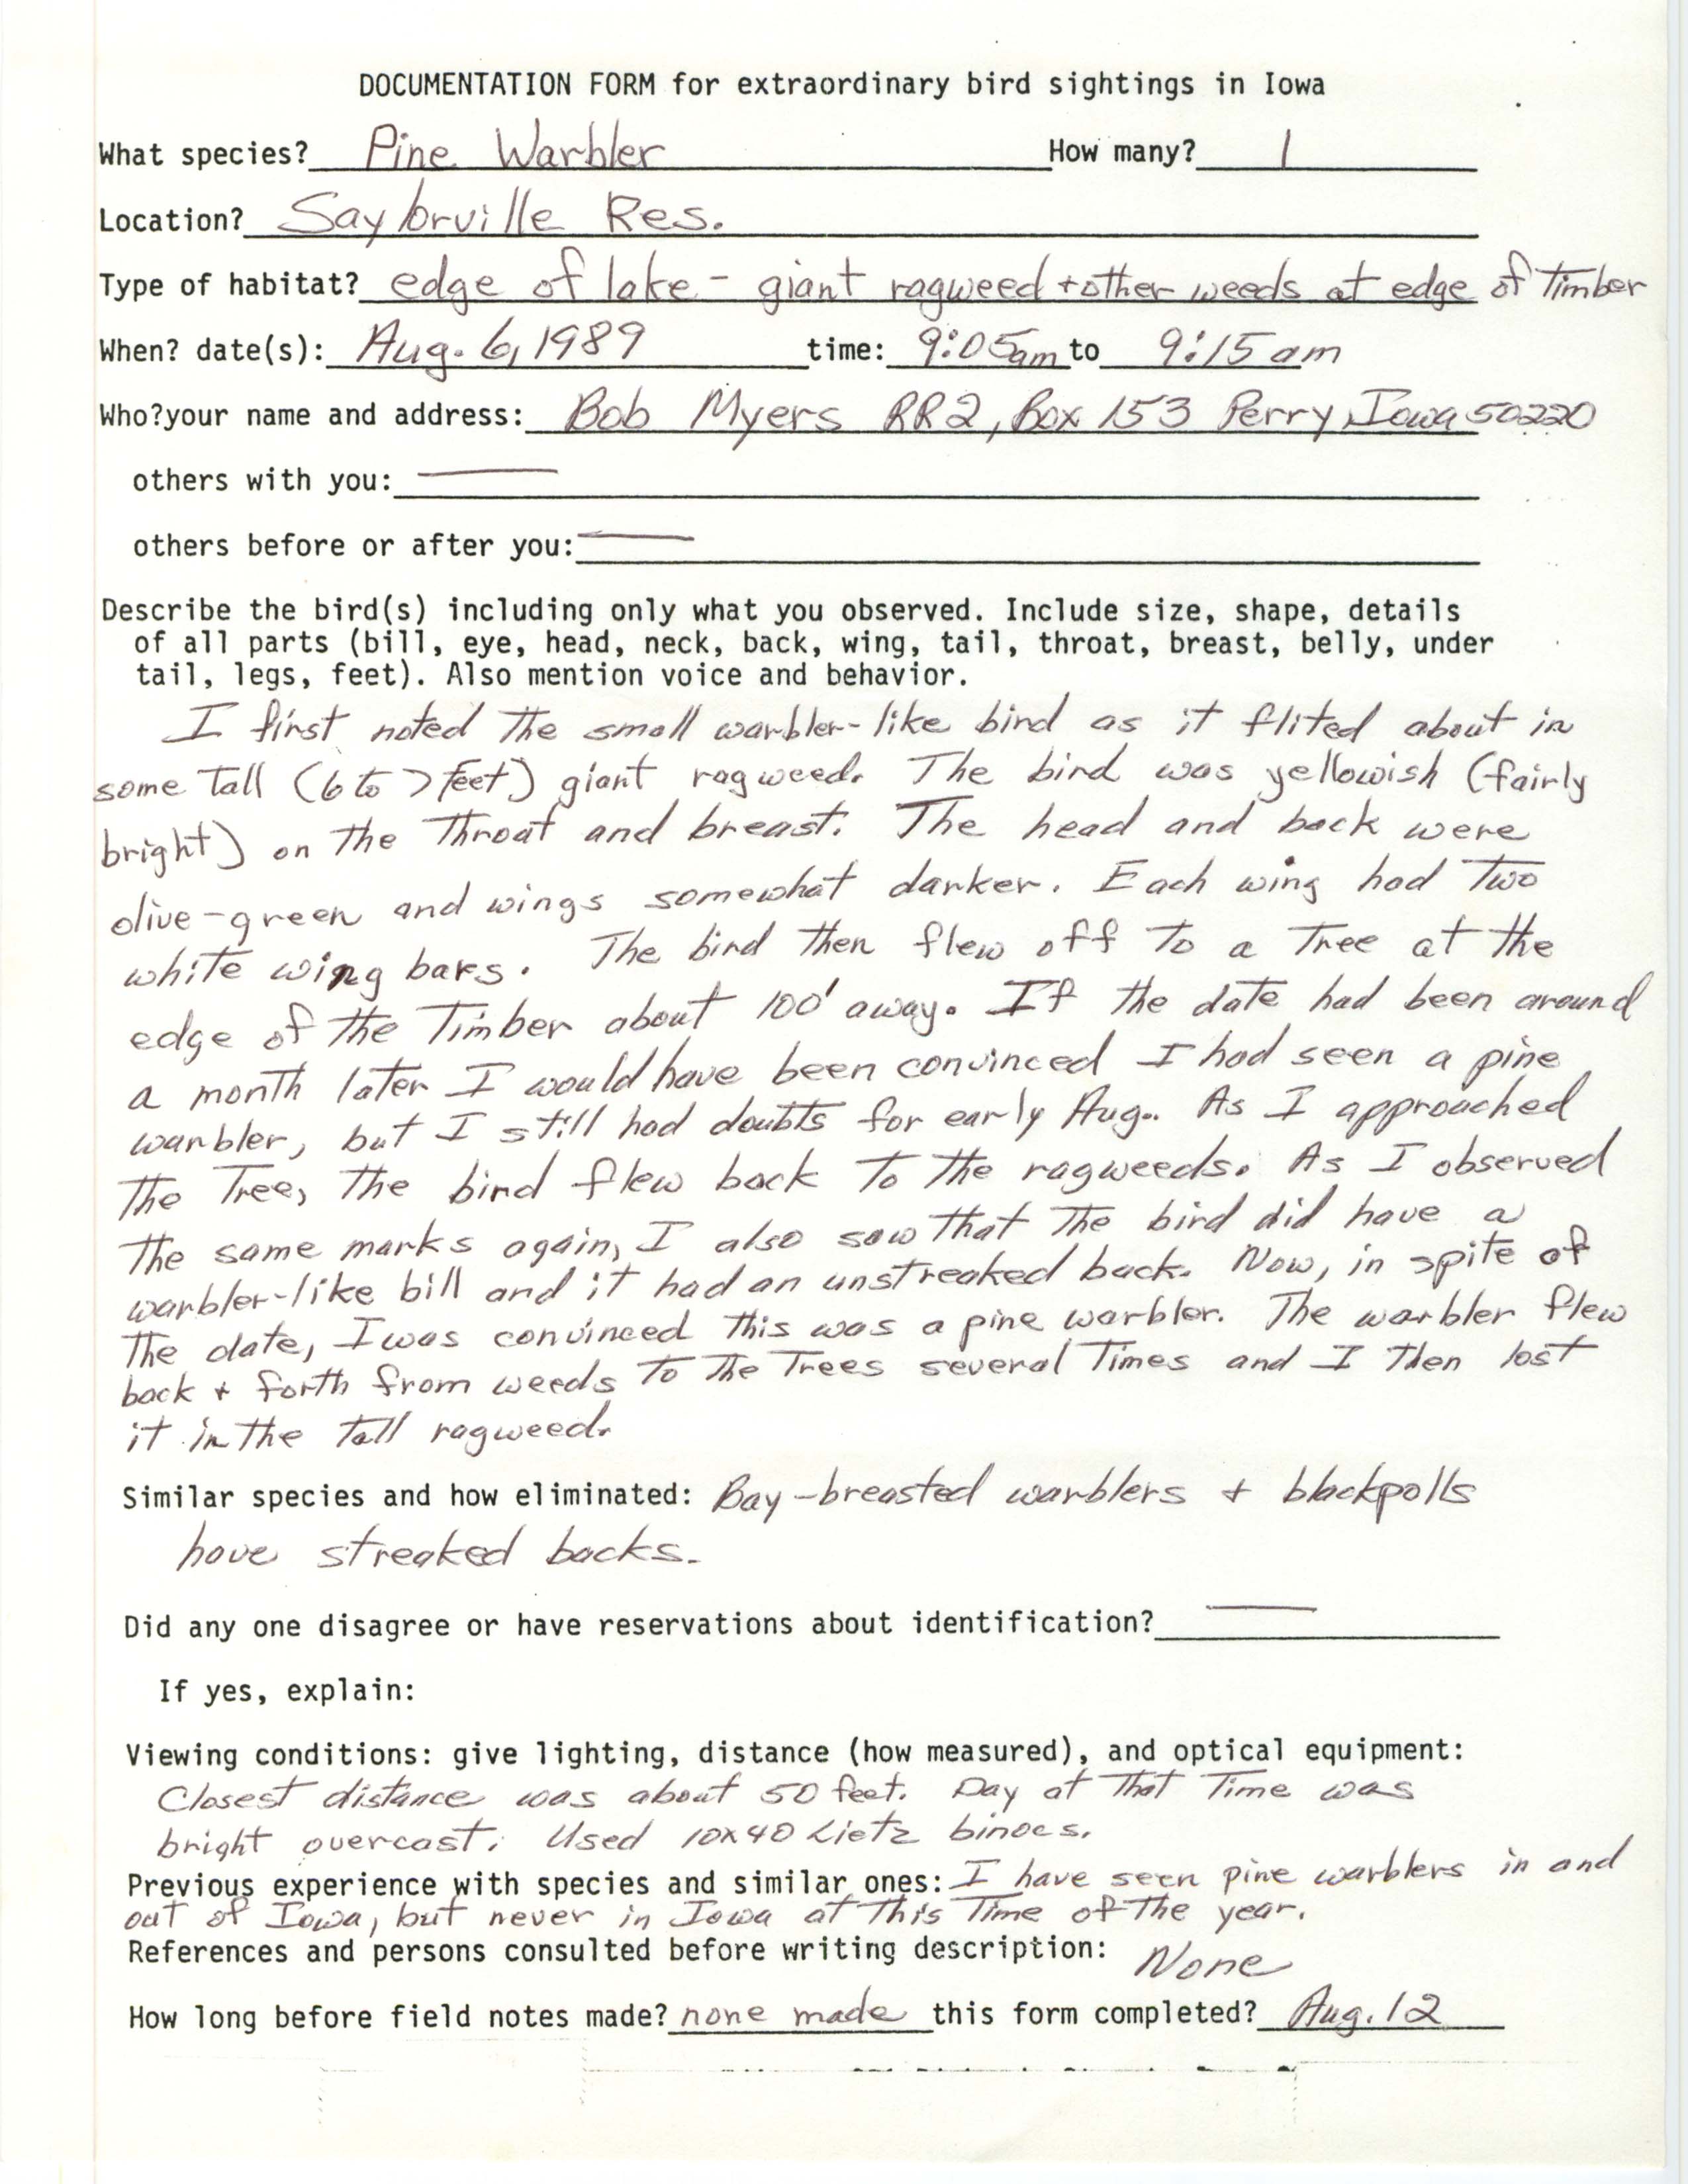 Rare bird documentation form for Pine Warbler at Saylorville Lake, 1989